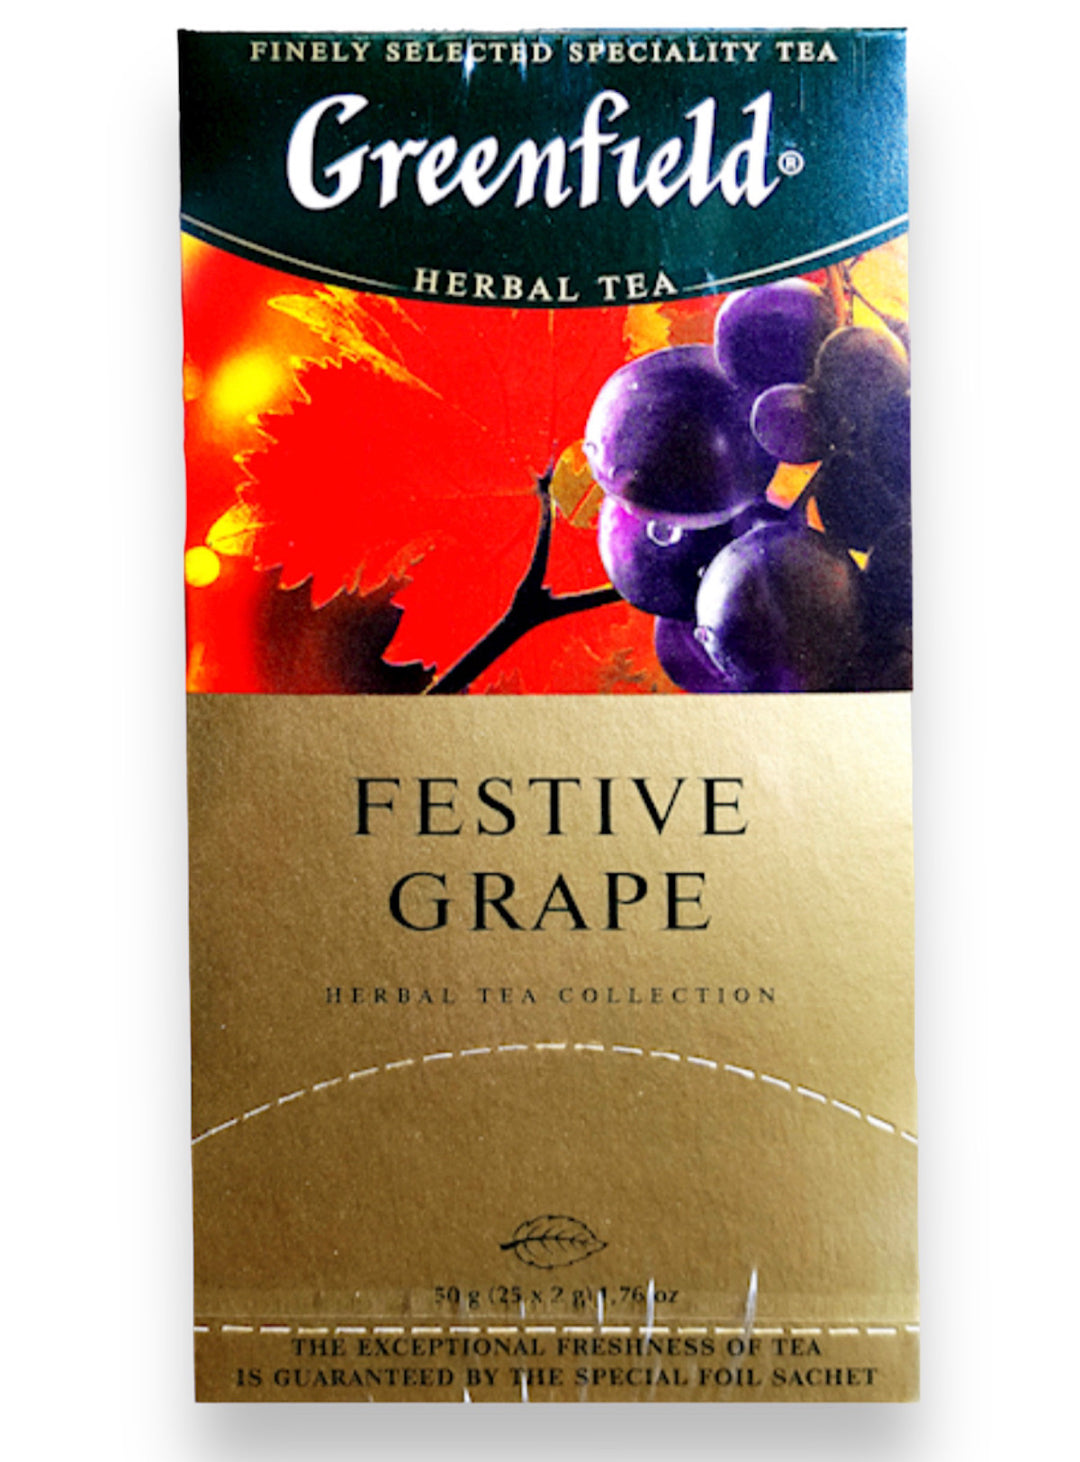 Festive Grape - Greenfield- 25 tea bags